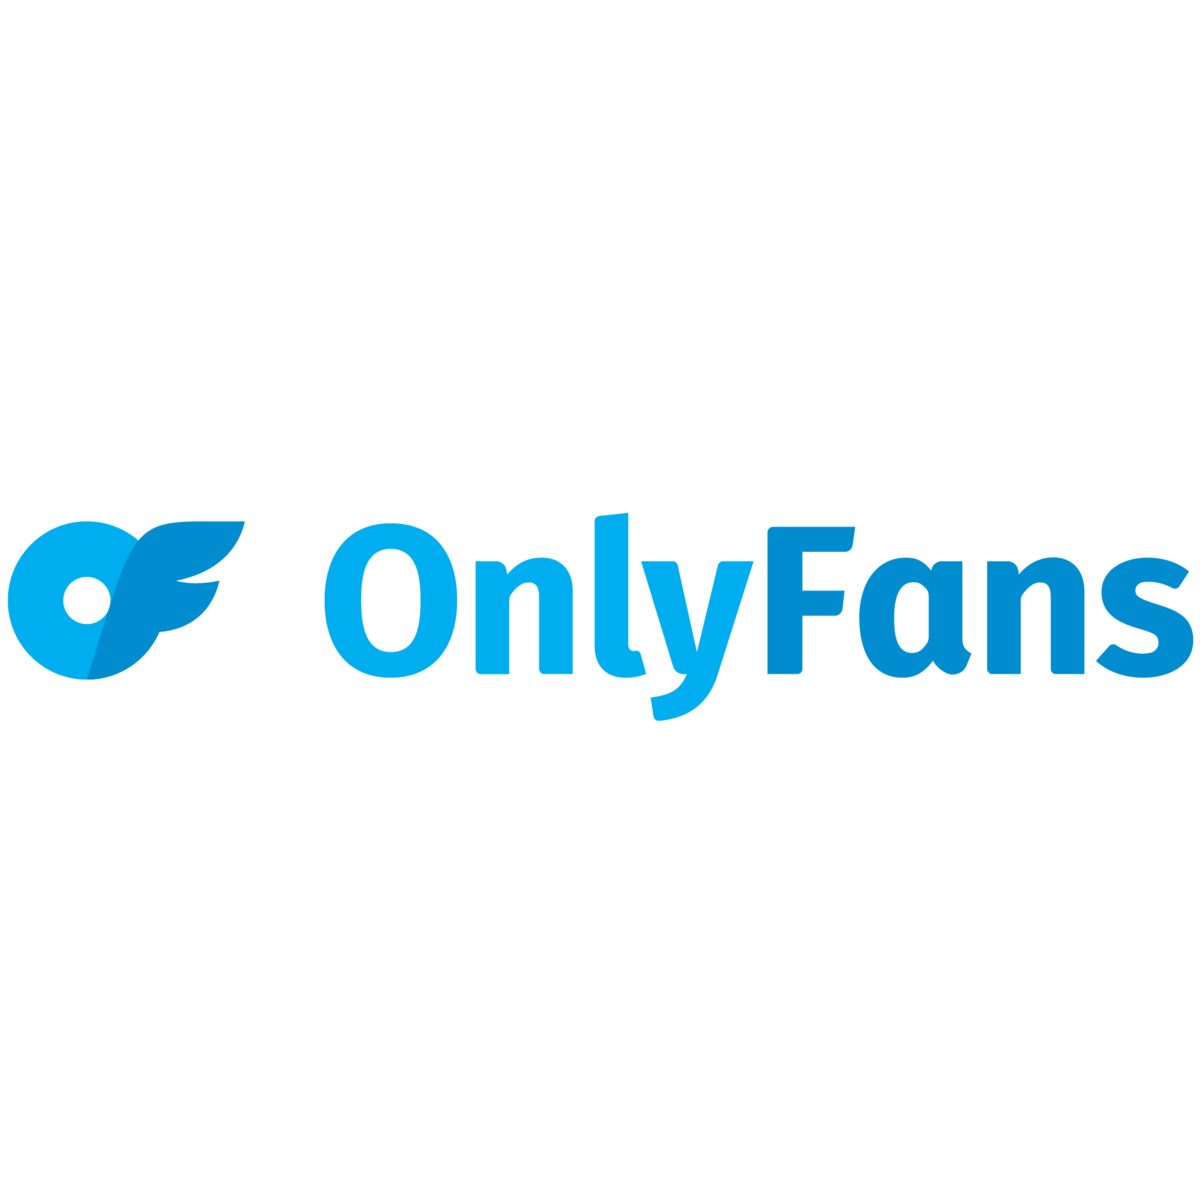 www.onlyfans.com